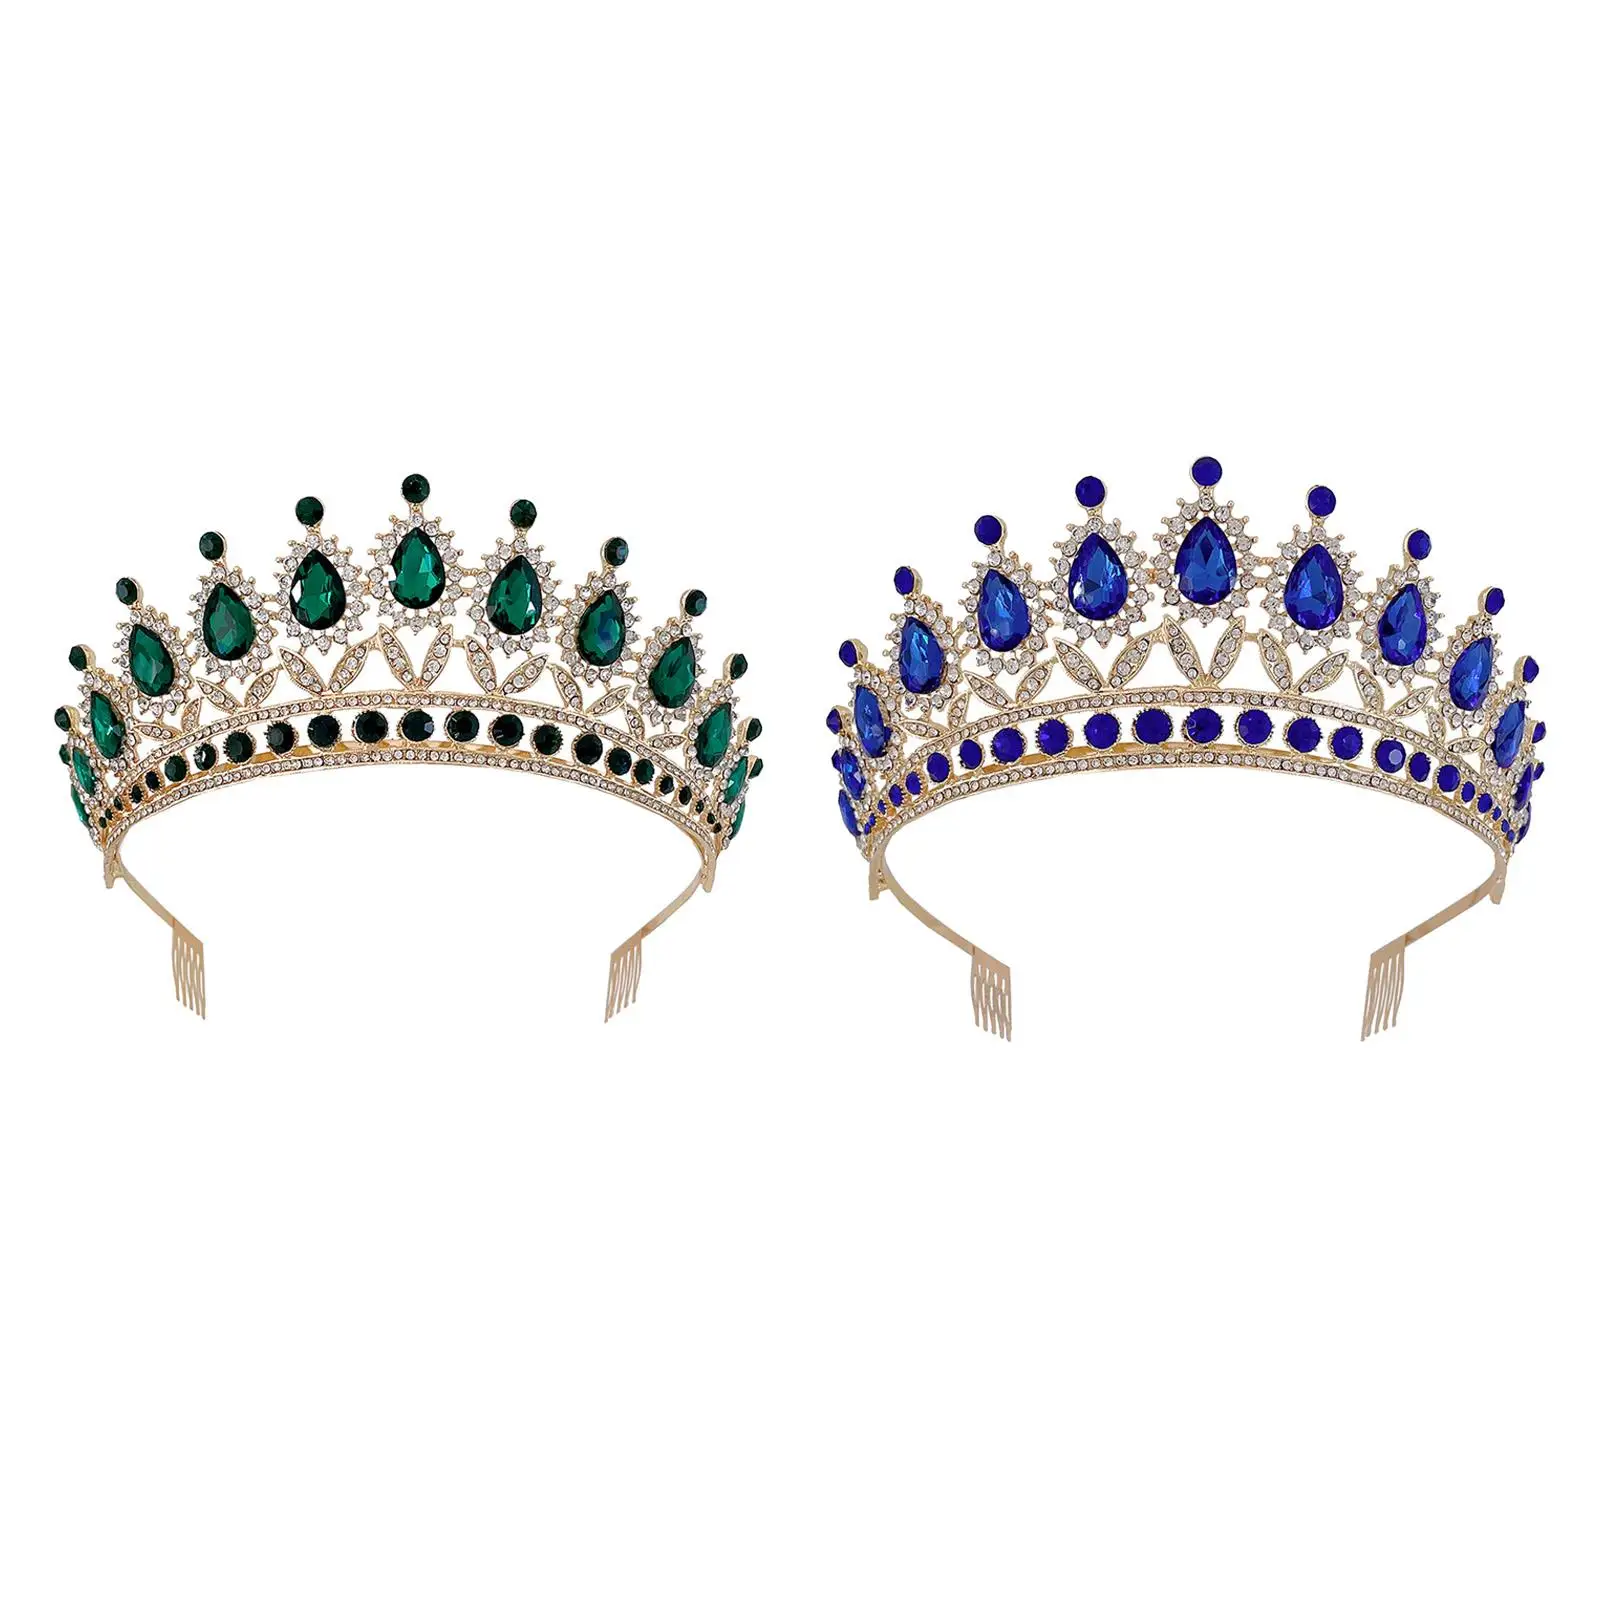 Rhinestone Tiara Headwear Gorgeous Shiny Vintage Style Headpiece Tiara Crown Tiara Crown Headband for Photography Props